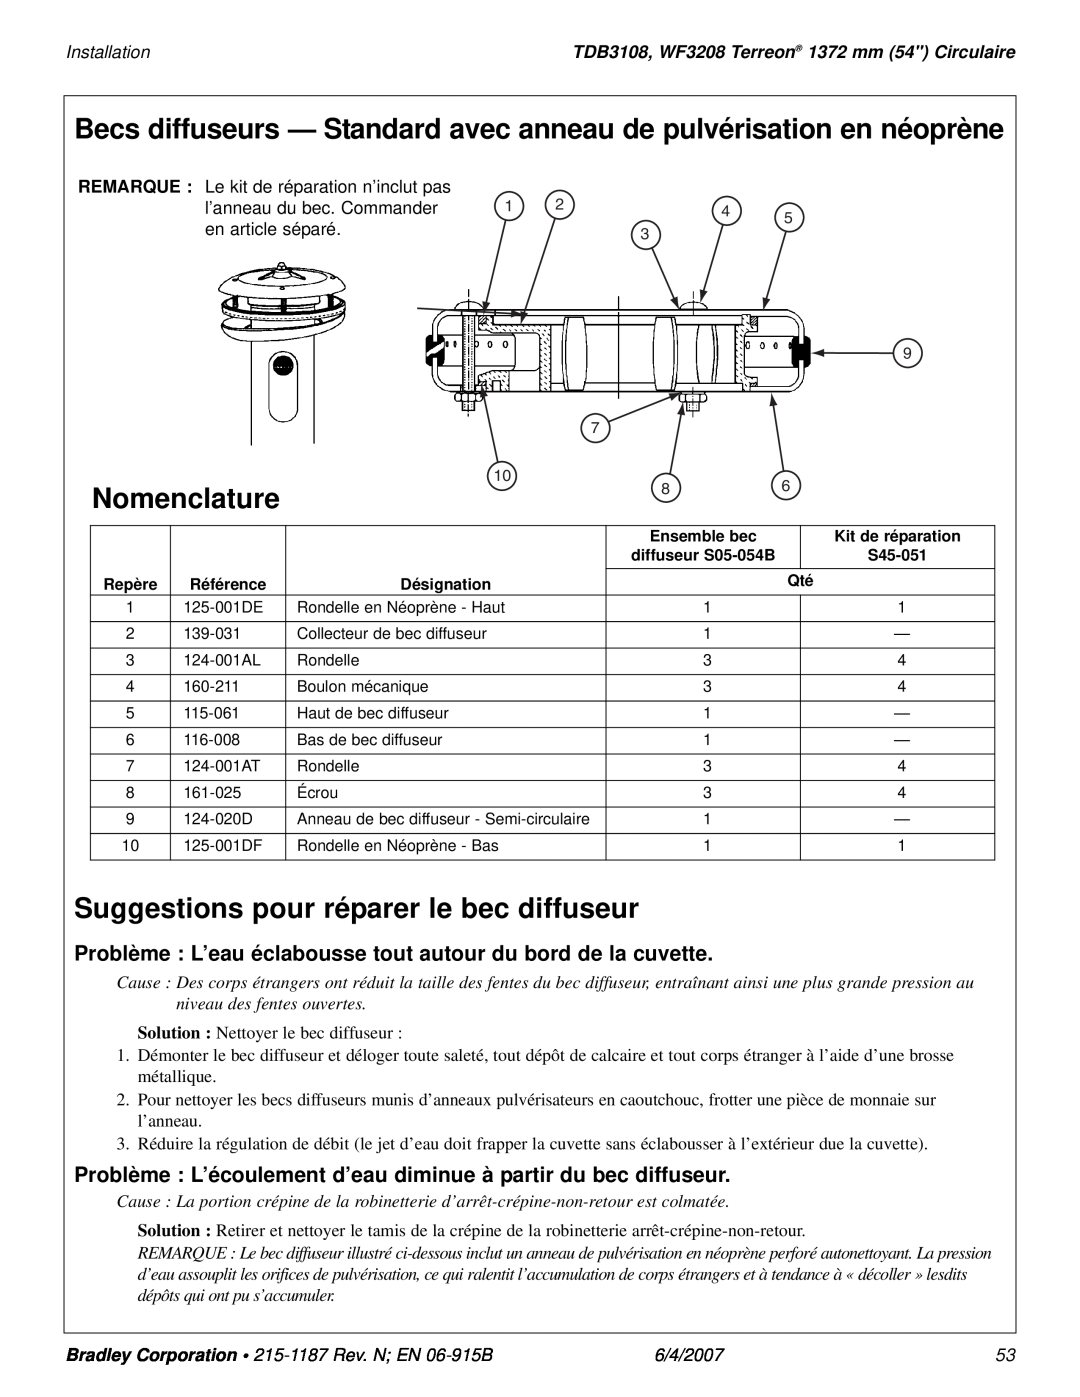 Bradley Smoker TDB3108 Becs diffuseurs - Standard avec anneau de pulvérisation en néoprène, Nomenclature, Installation 